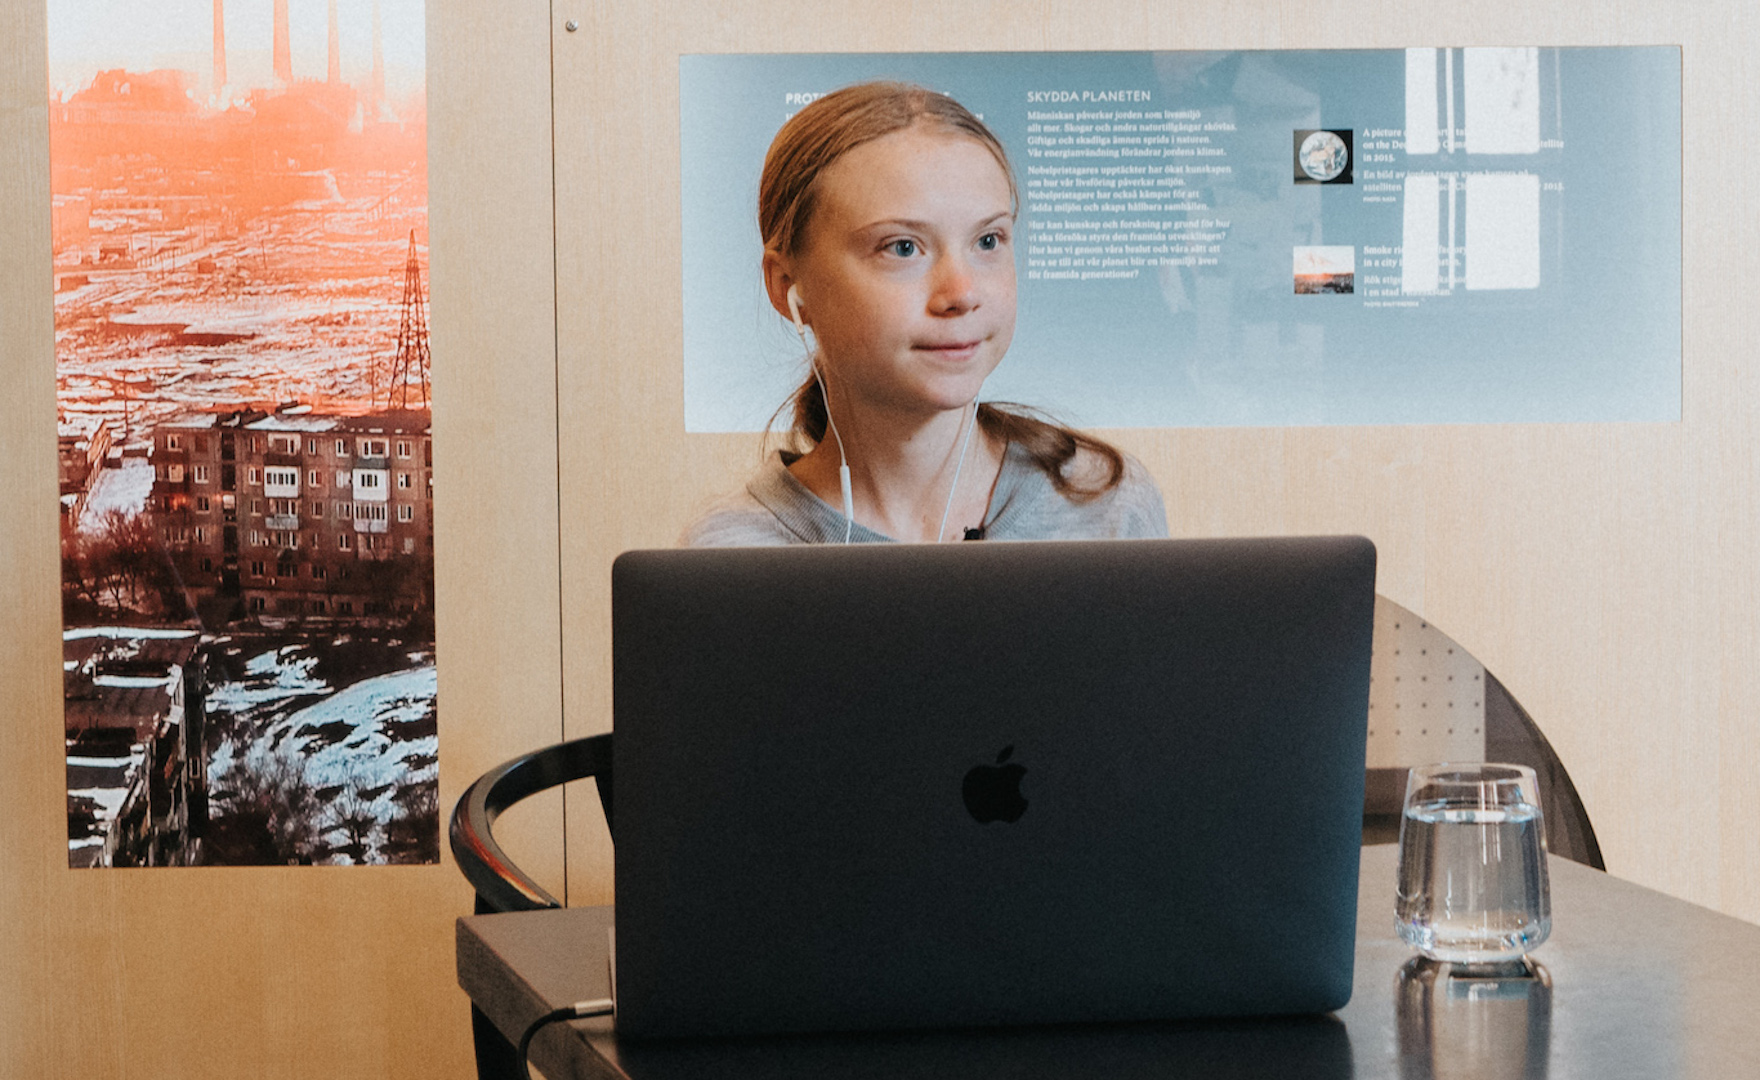 Digital Earth Day 2020: A Conversation between Greta Thunberg and Johan Rockström from the Nobel Museum